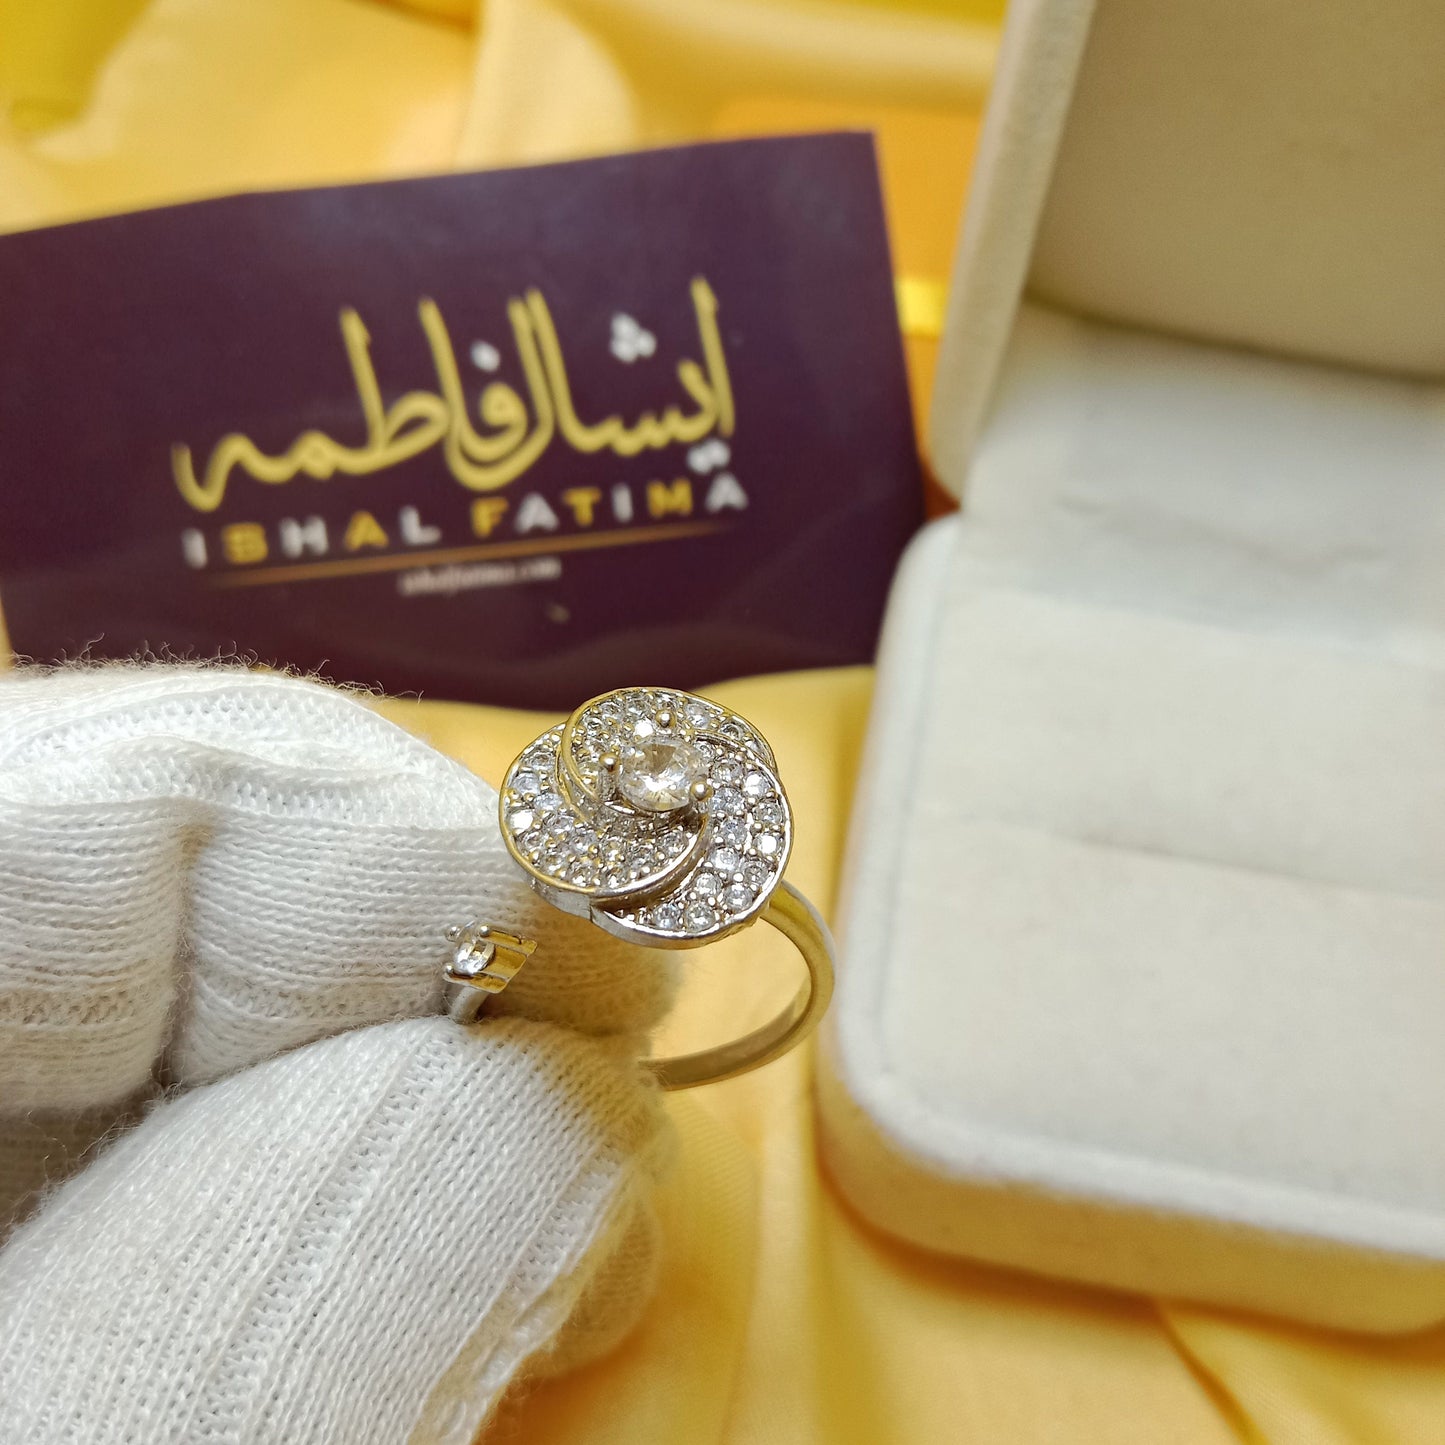 Ishal Fatima Desing 2 silver Adjustable Moving Ring